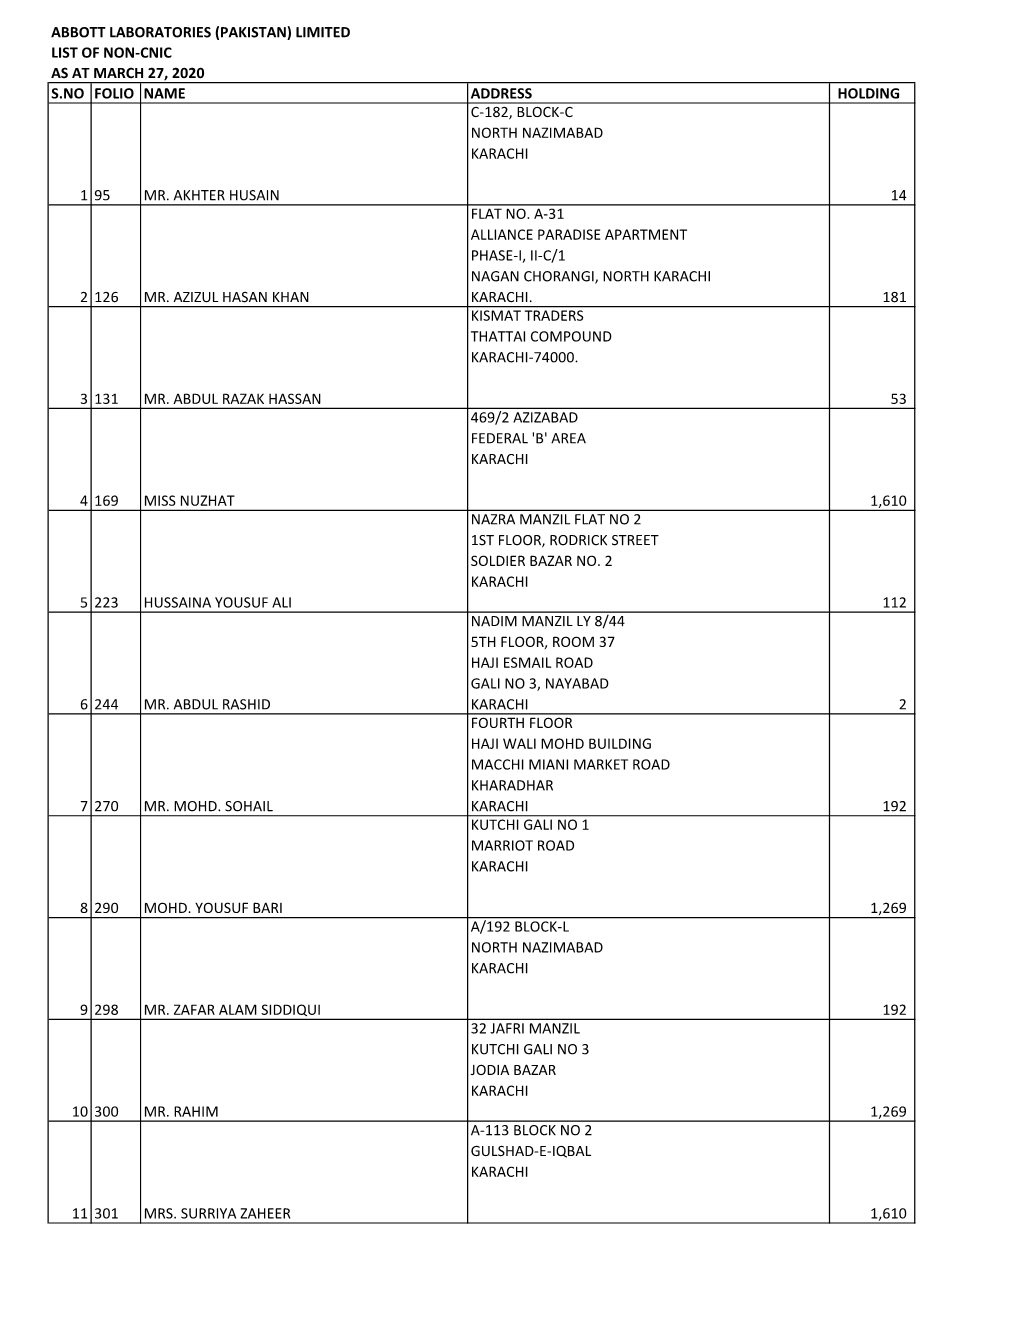 Abbott Laboratories (Pakistan) Limited List of Non-Cnic As at March 27, 2020 S.No Folio Name Address Holding C-182, Block-C North Nazimabad Karachi